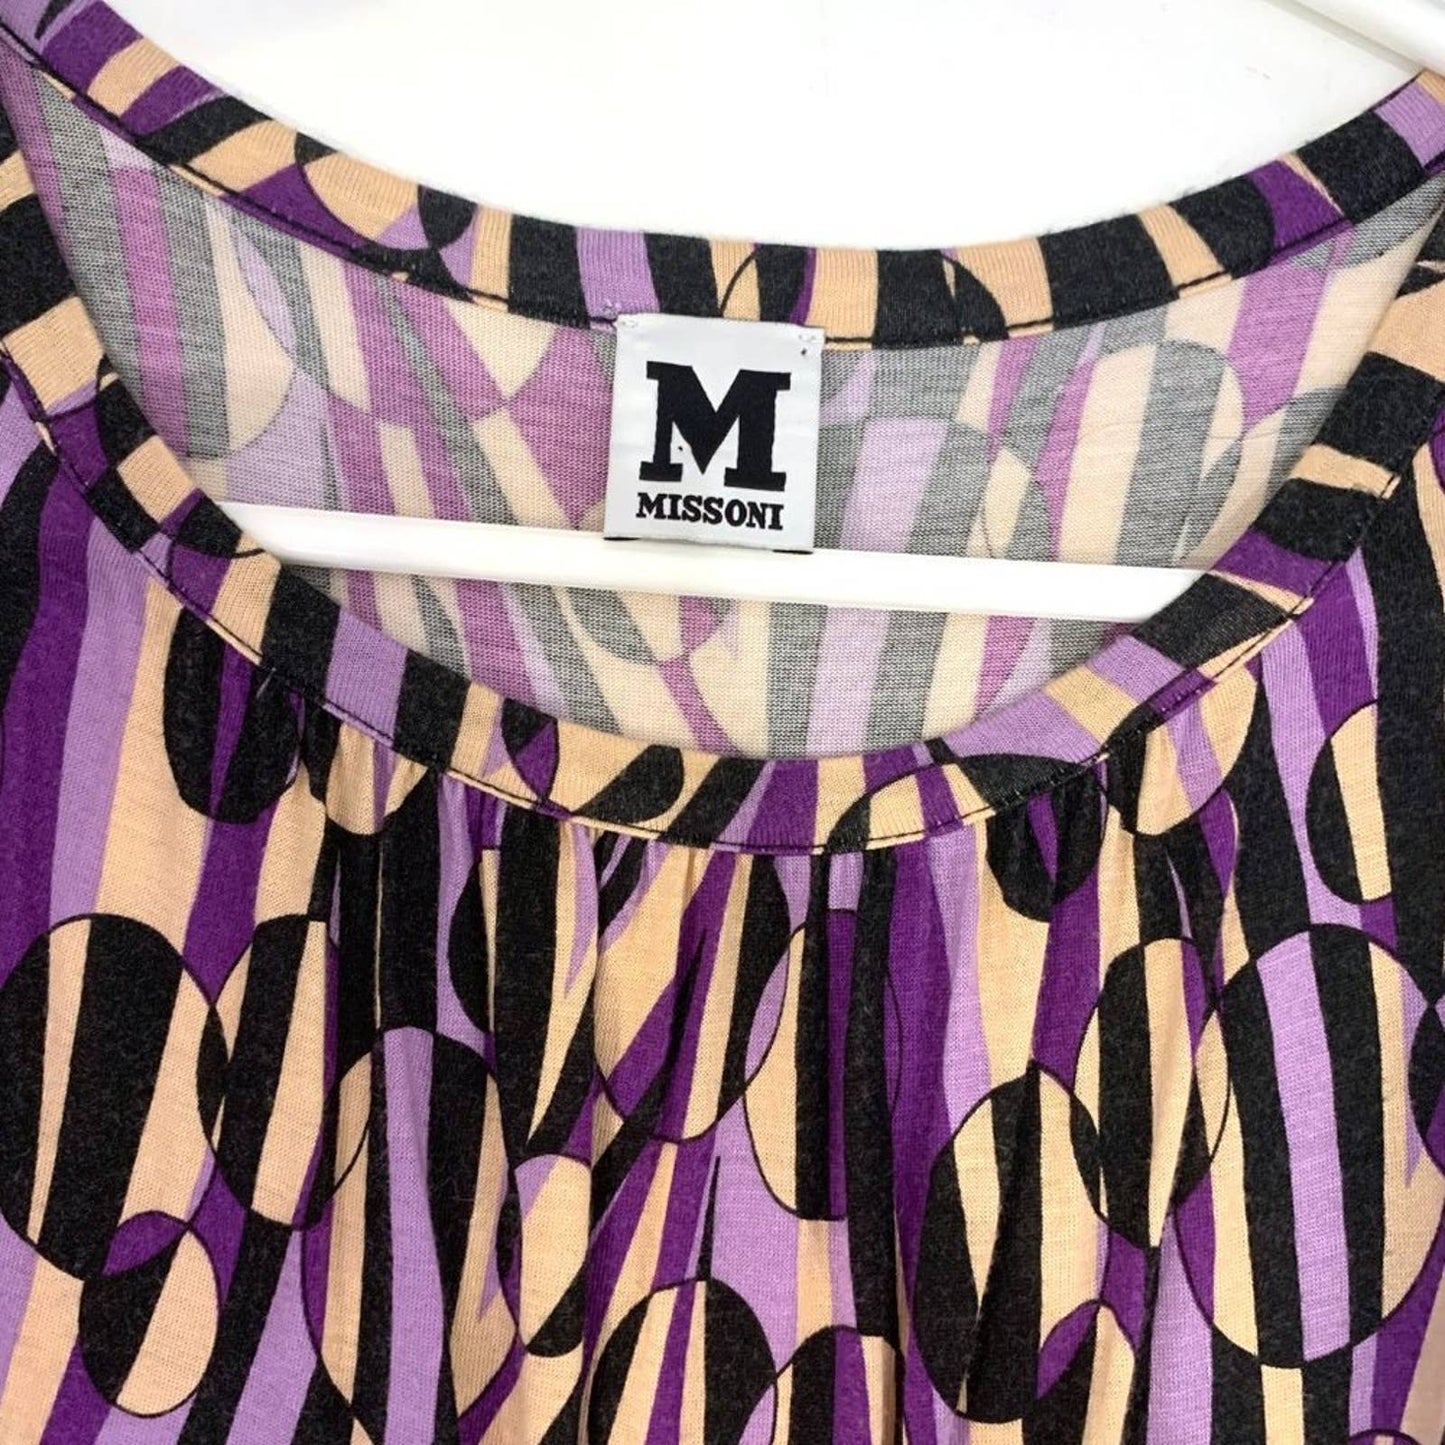 M MISSONI Multicolor Lavender Printed Knee Length Sleeveless Dress  